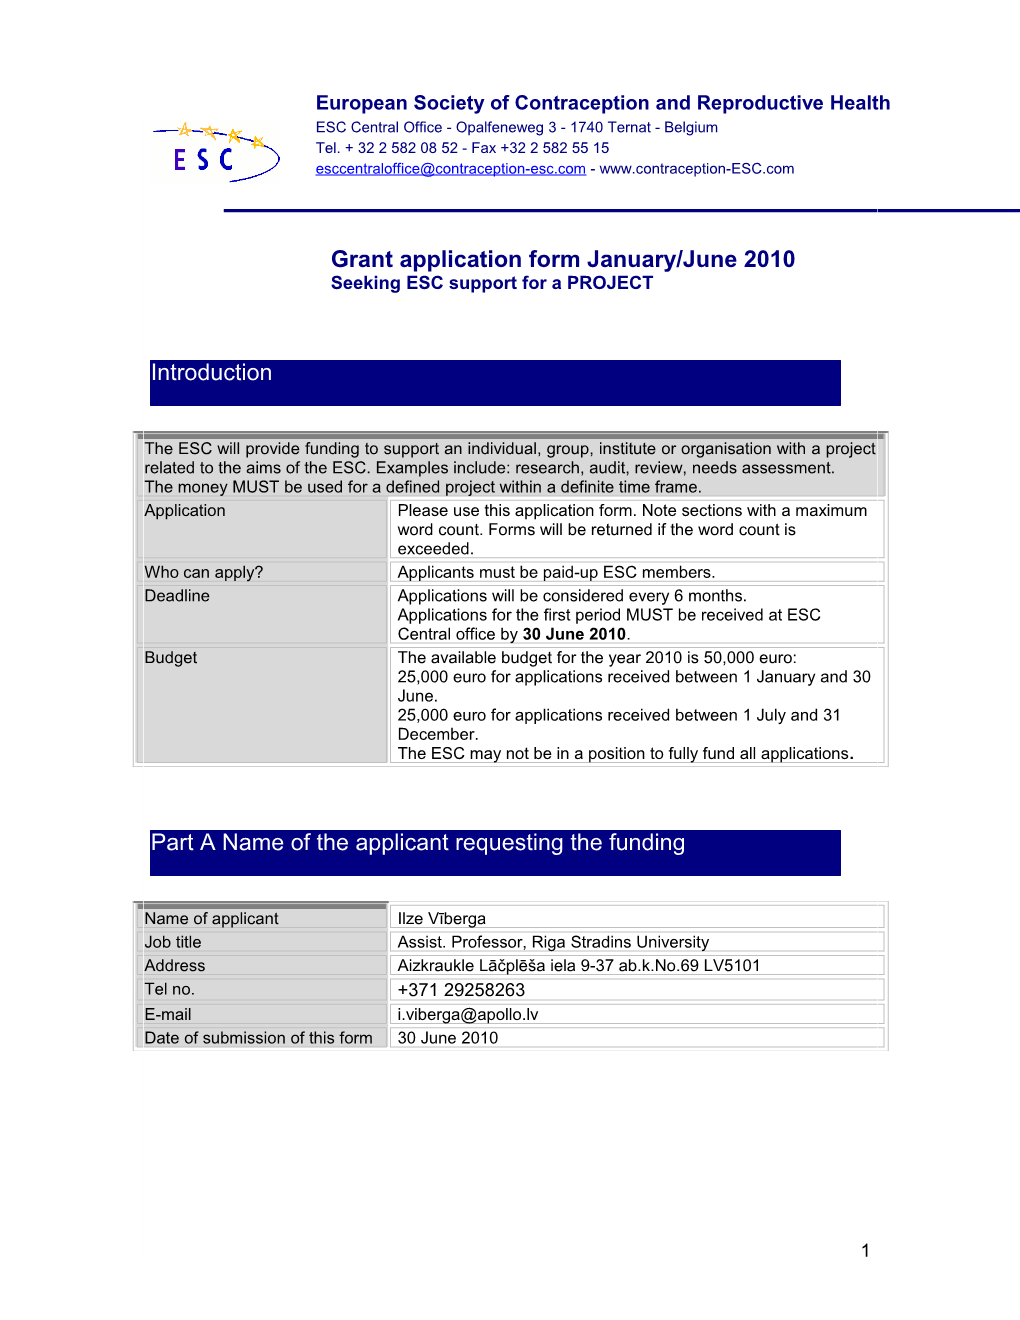 Grant Application Form January/June 2010